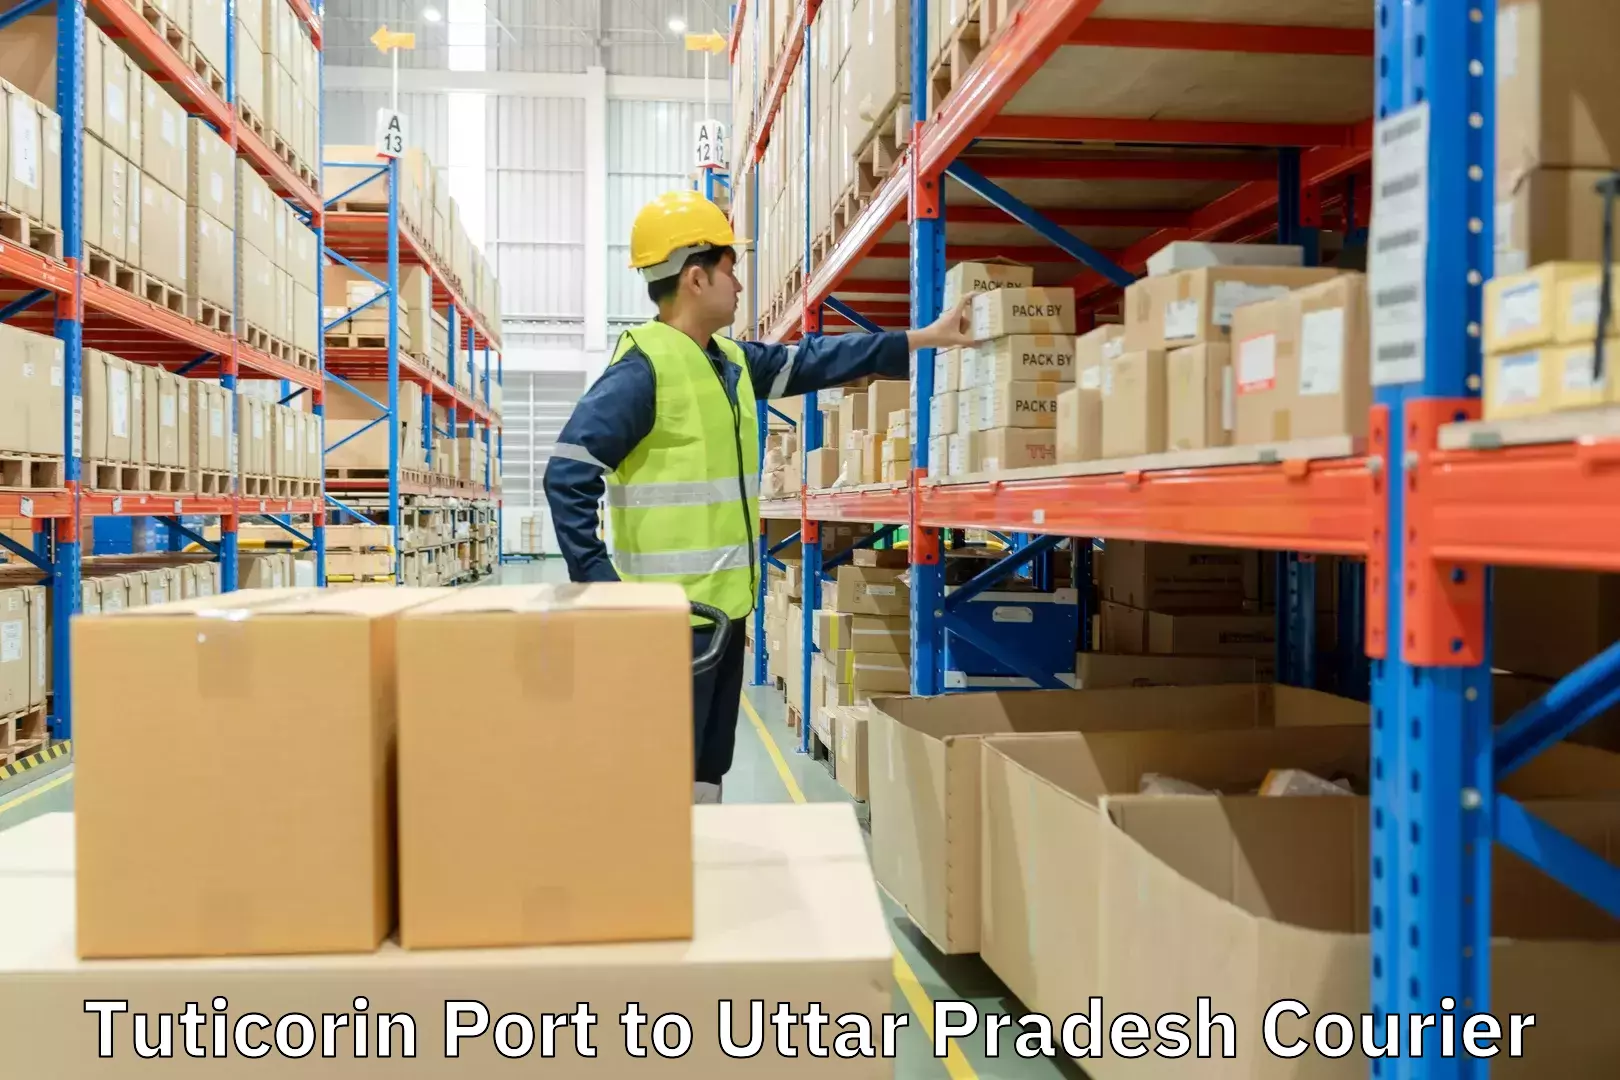 High-performance logistics Tuticorin Port to Uttar Pradesh